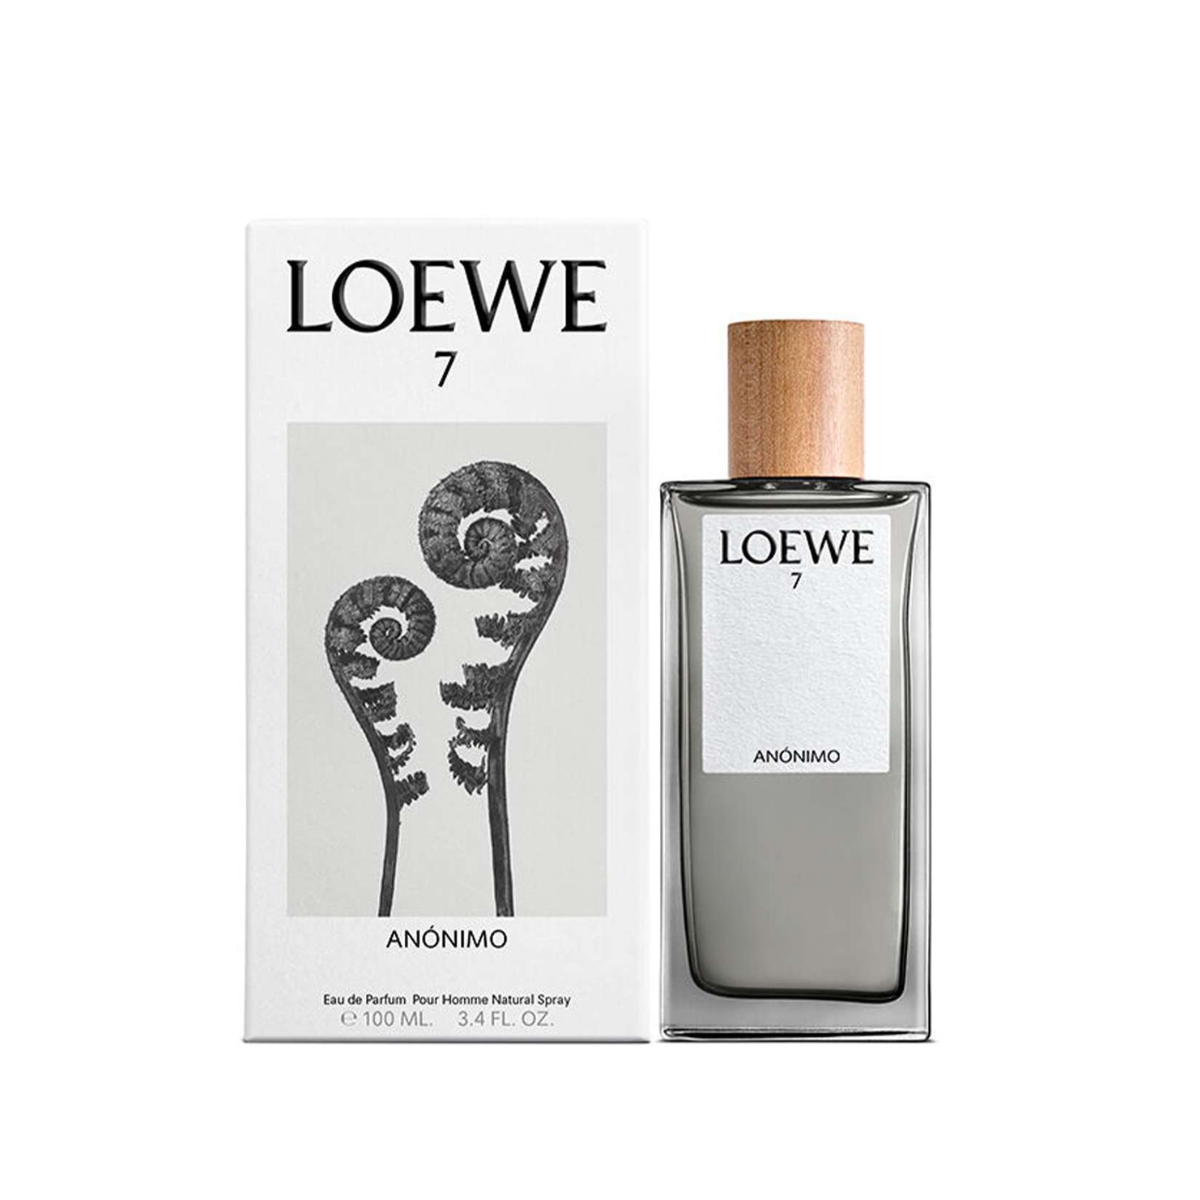 Loewe 7 Anonimo Eau De Parfum